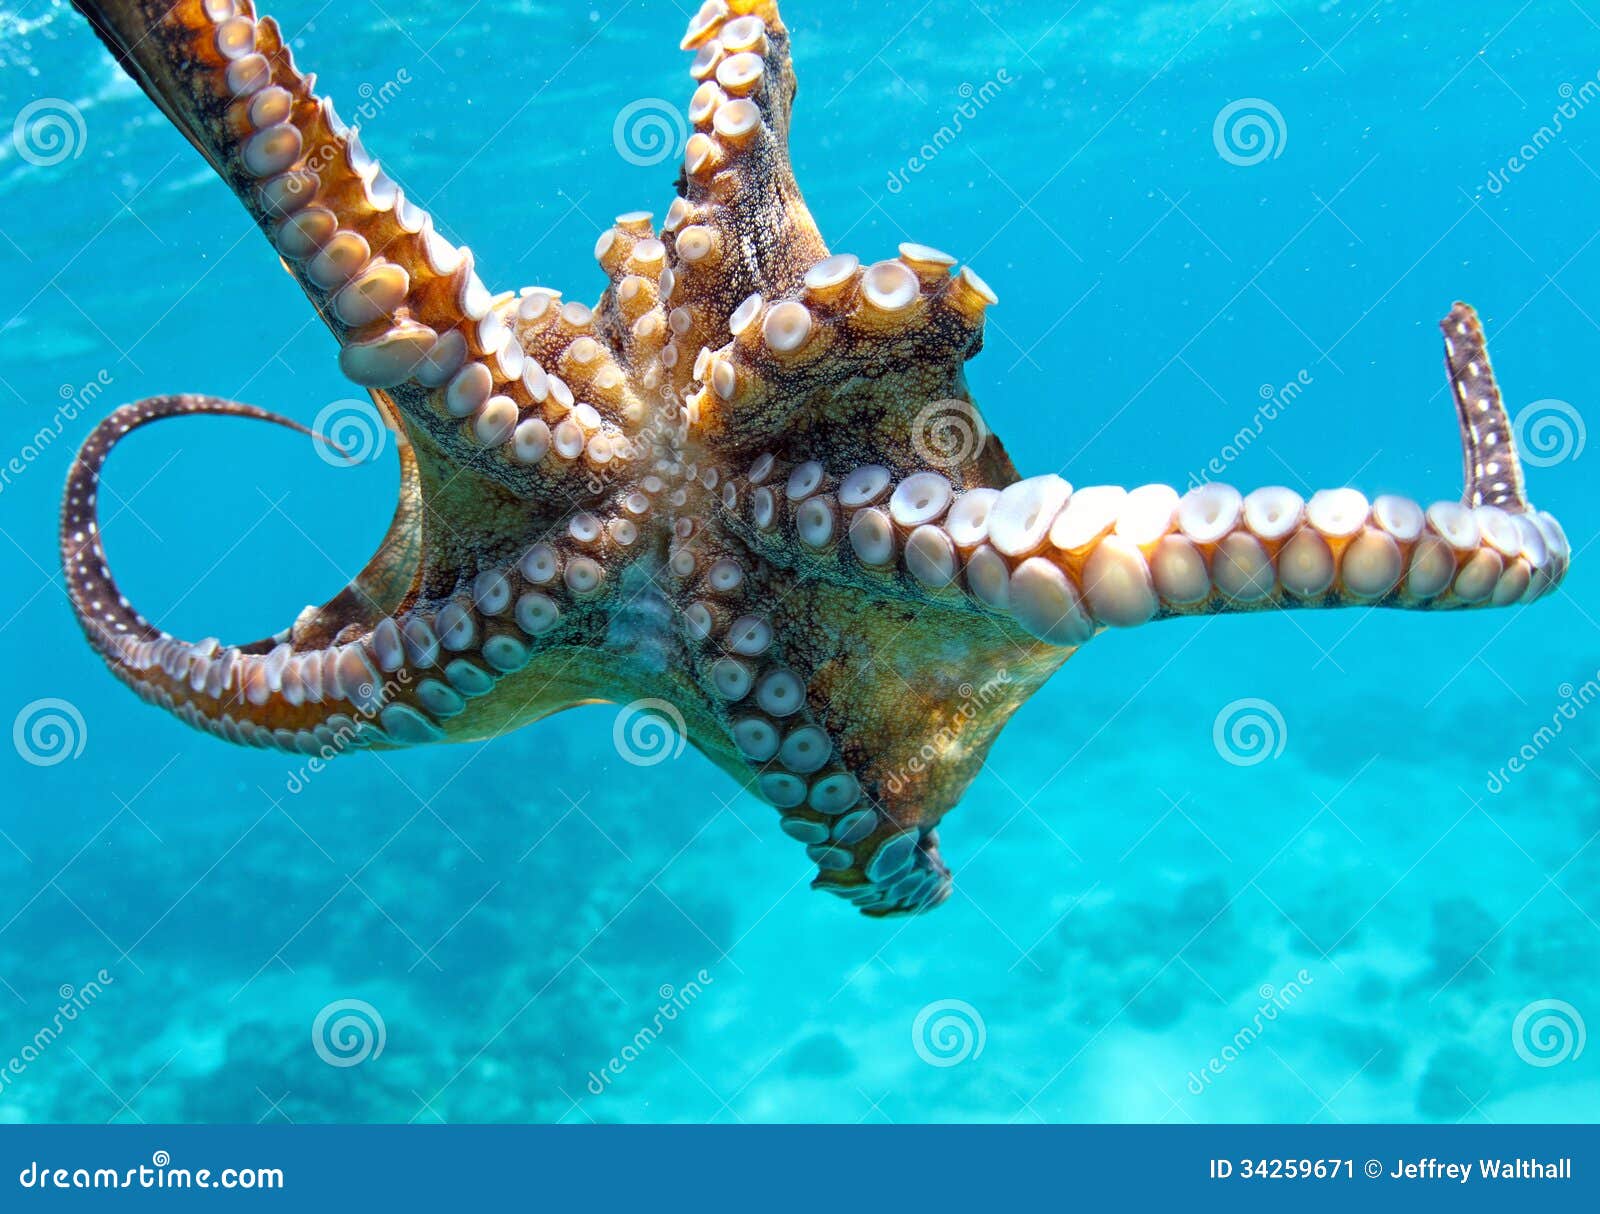 octopus up close